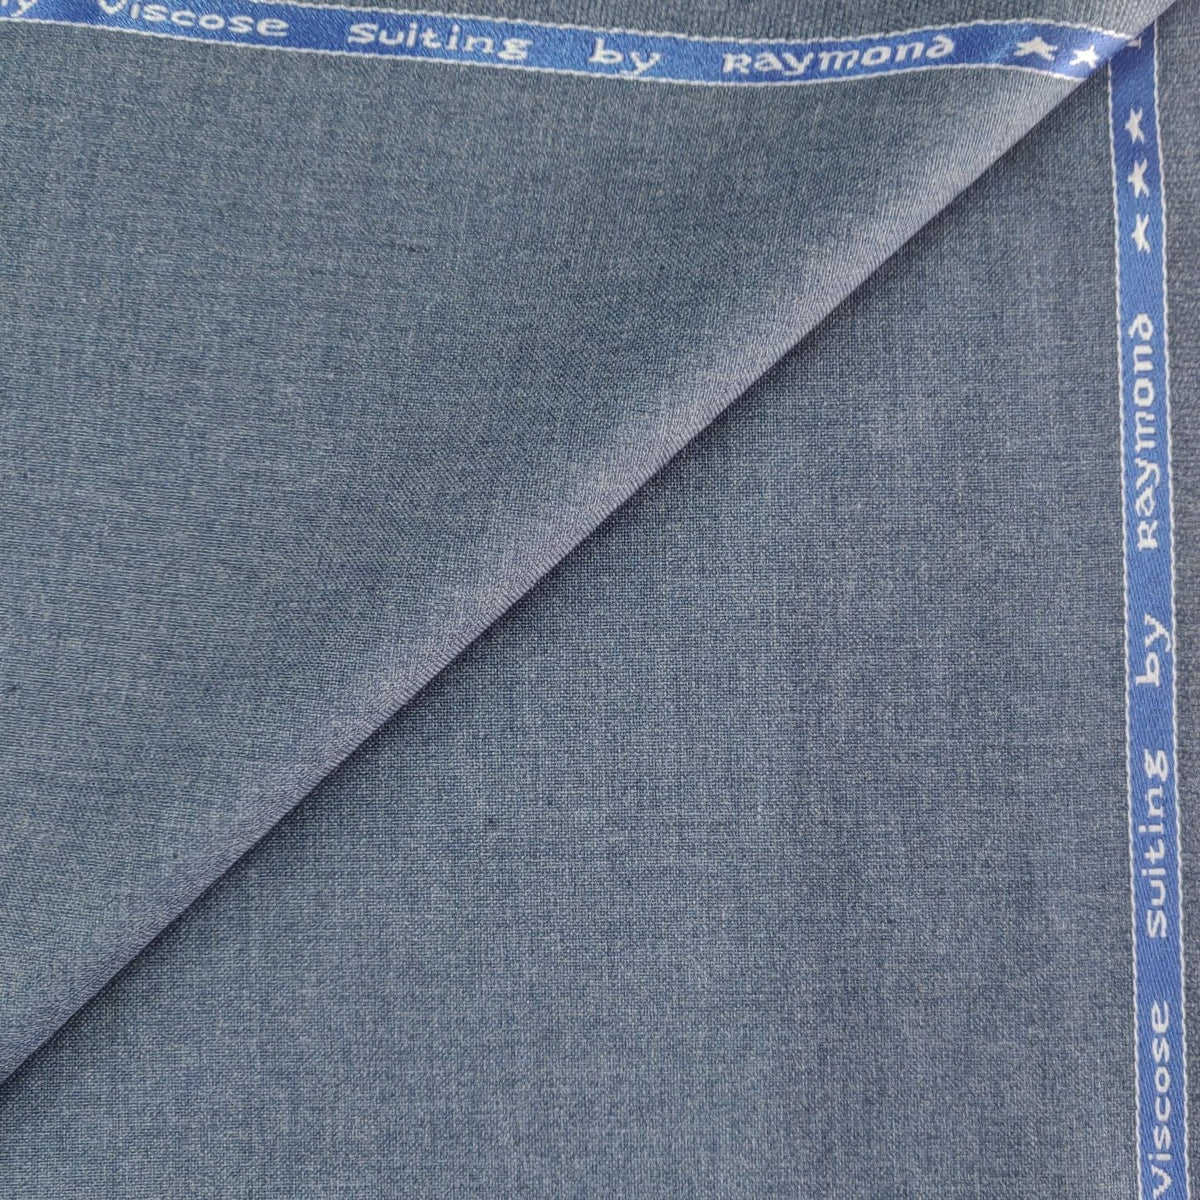 Raymond's Premium 2 Pant fabric Combo(Blue,Grey) - ManTire